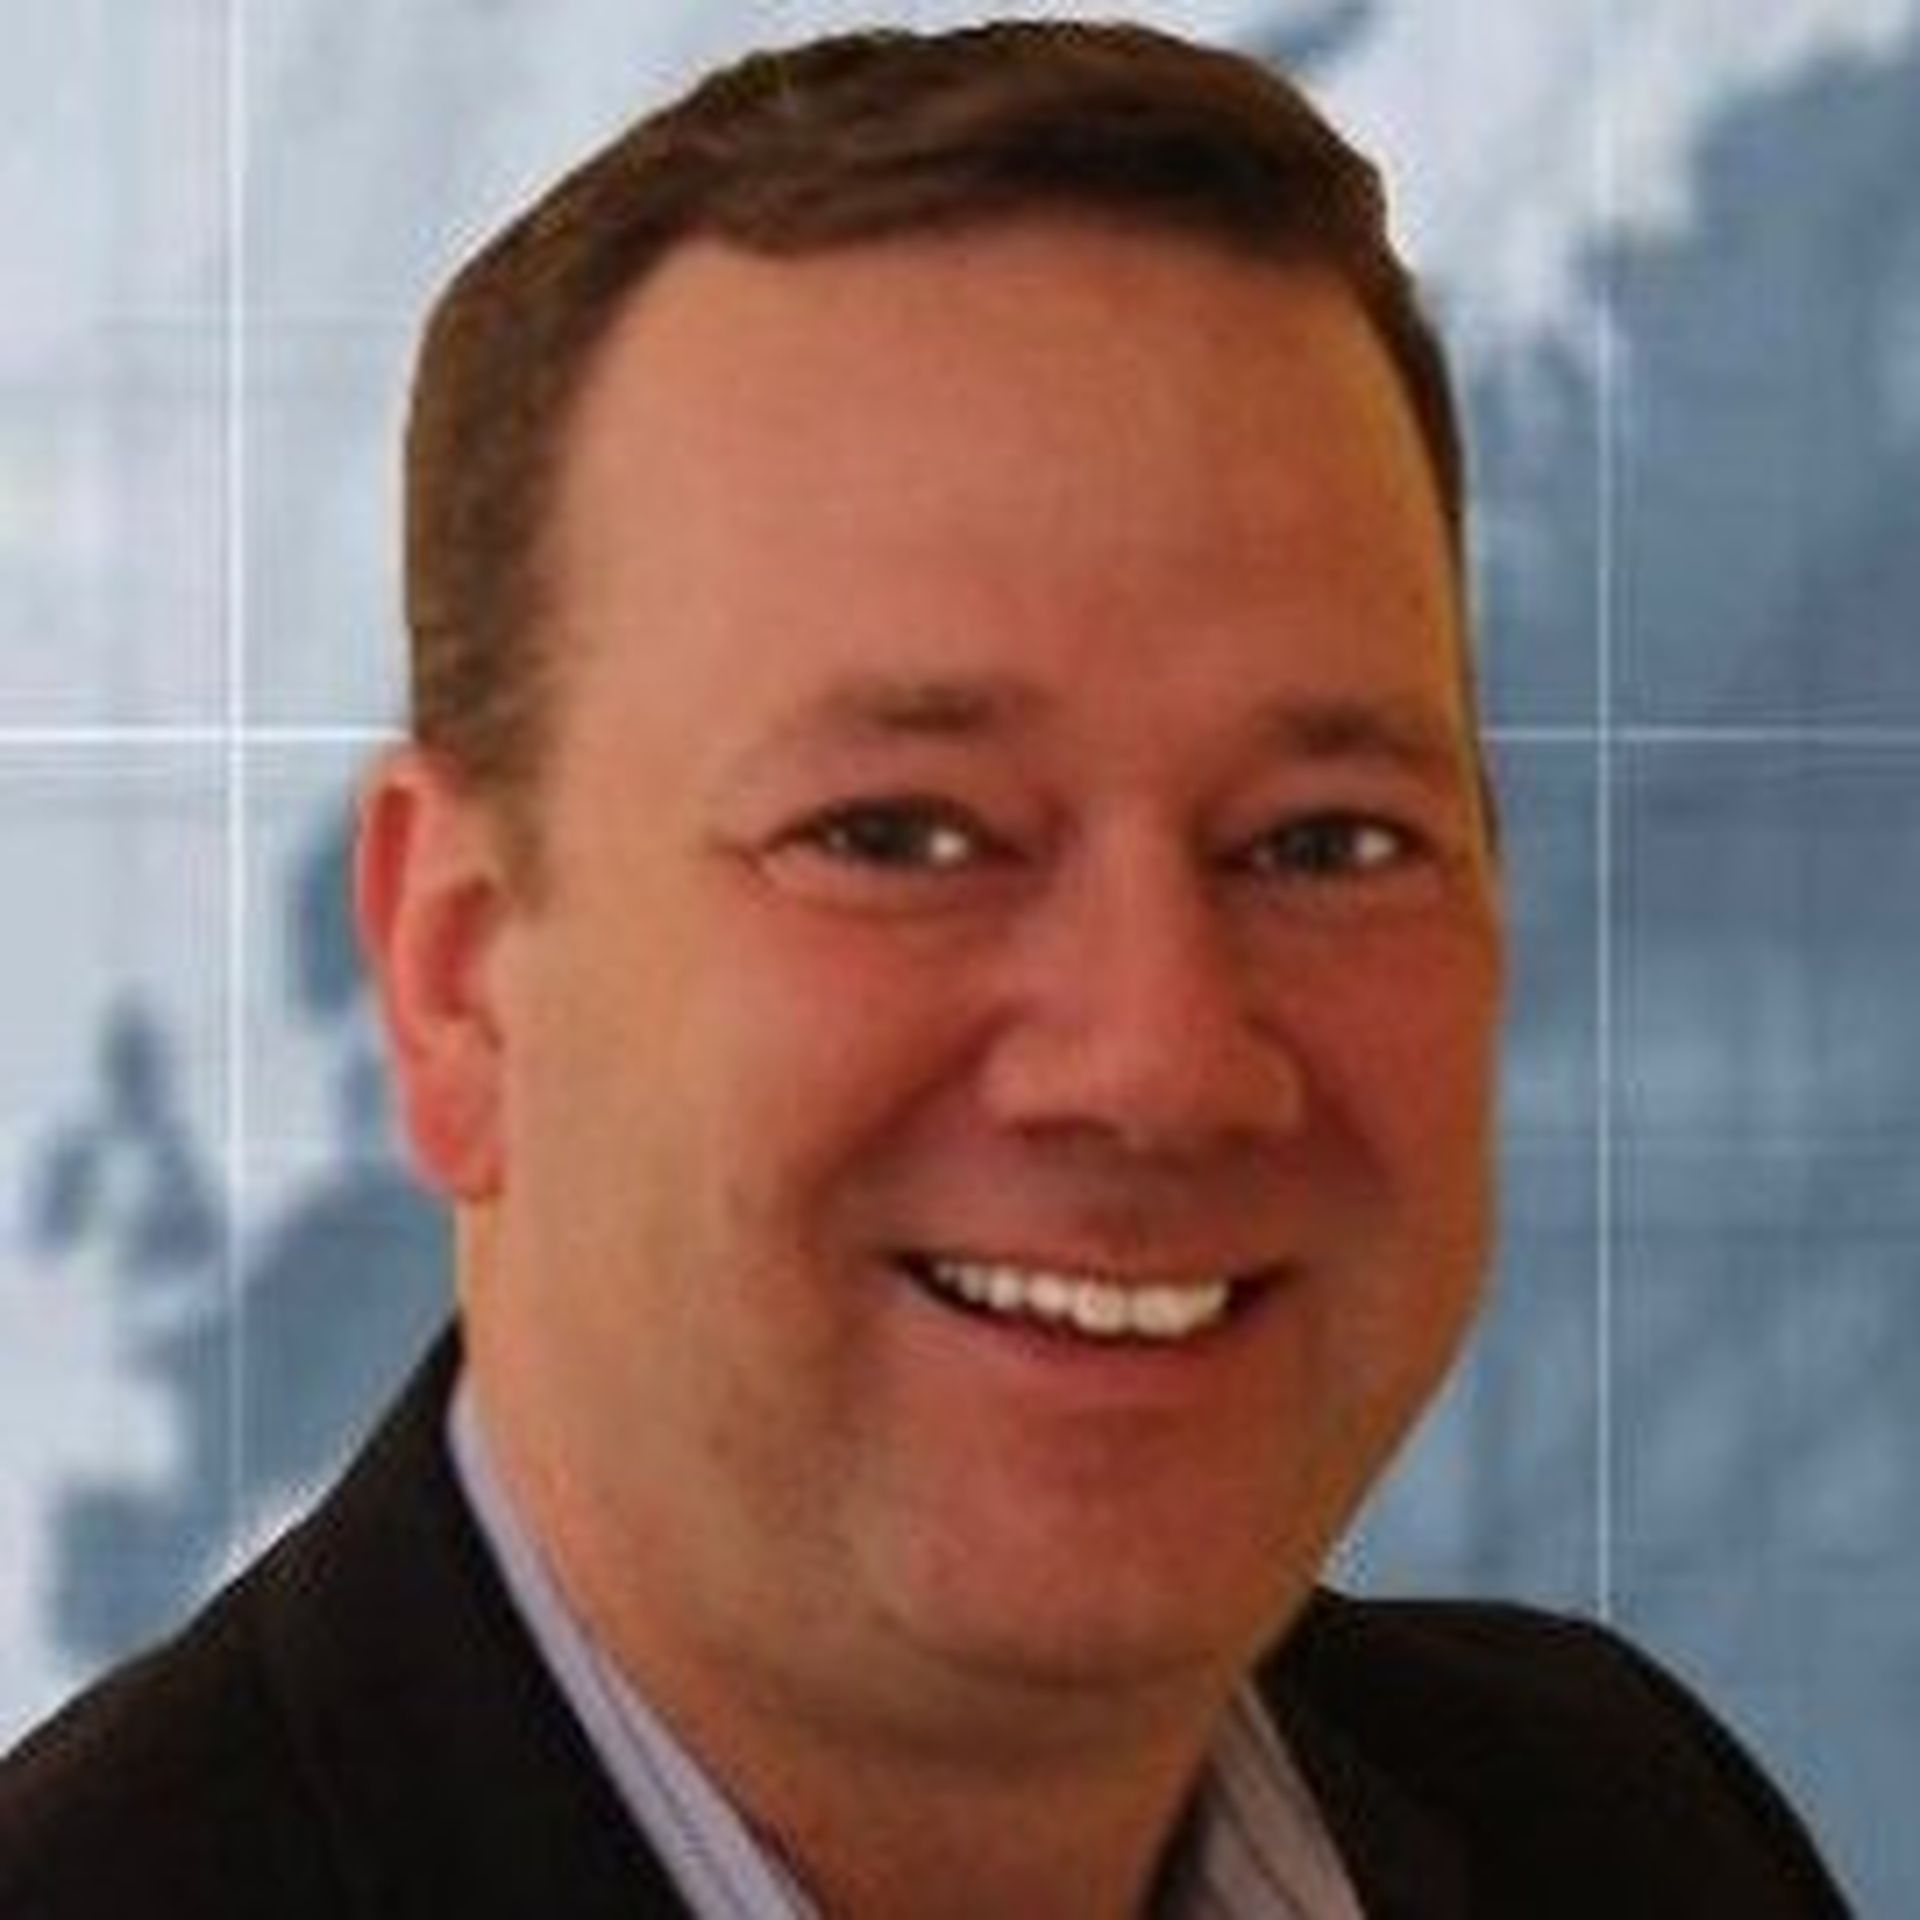 LinkedIn: Craig Stilwell, chief revenue officer, Carbonite